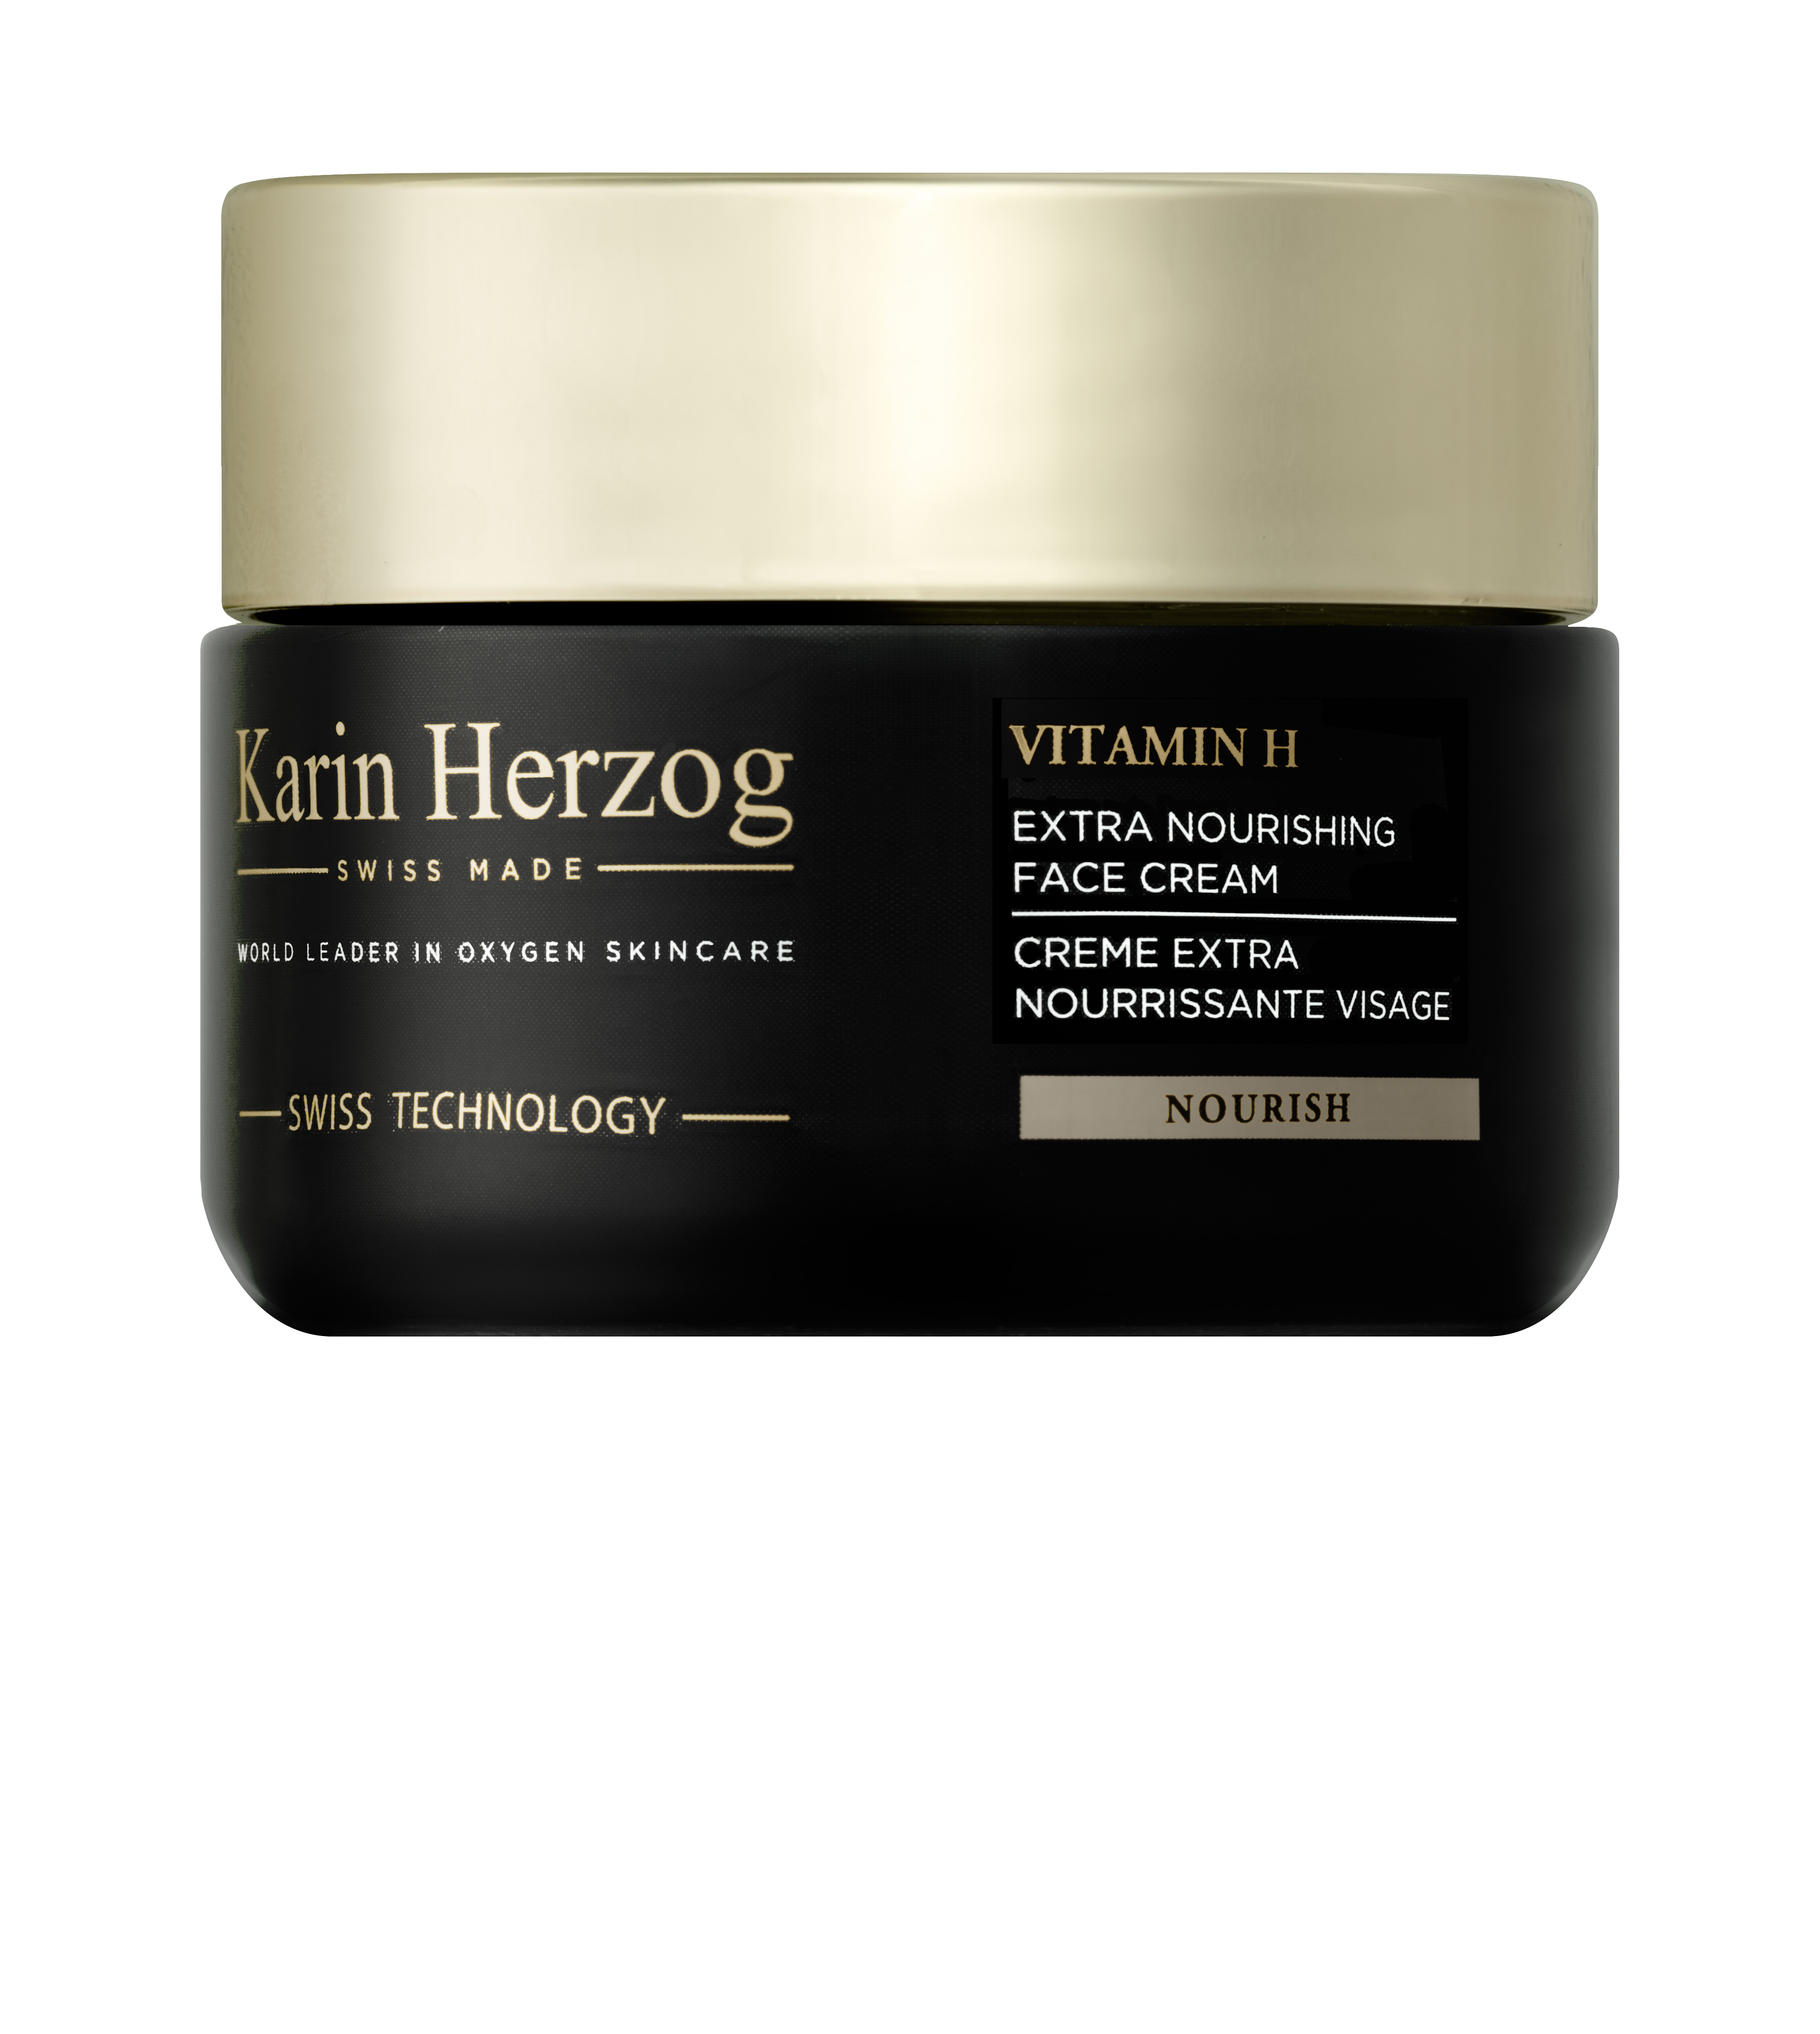 Karin Herzog Vitamin H Cream 50ml